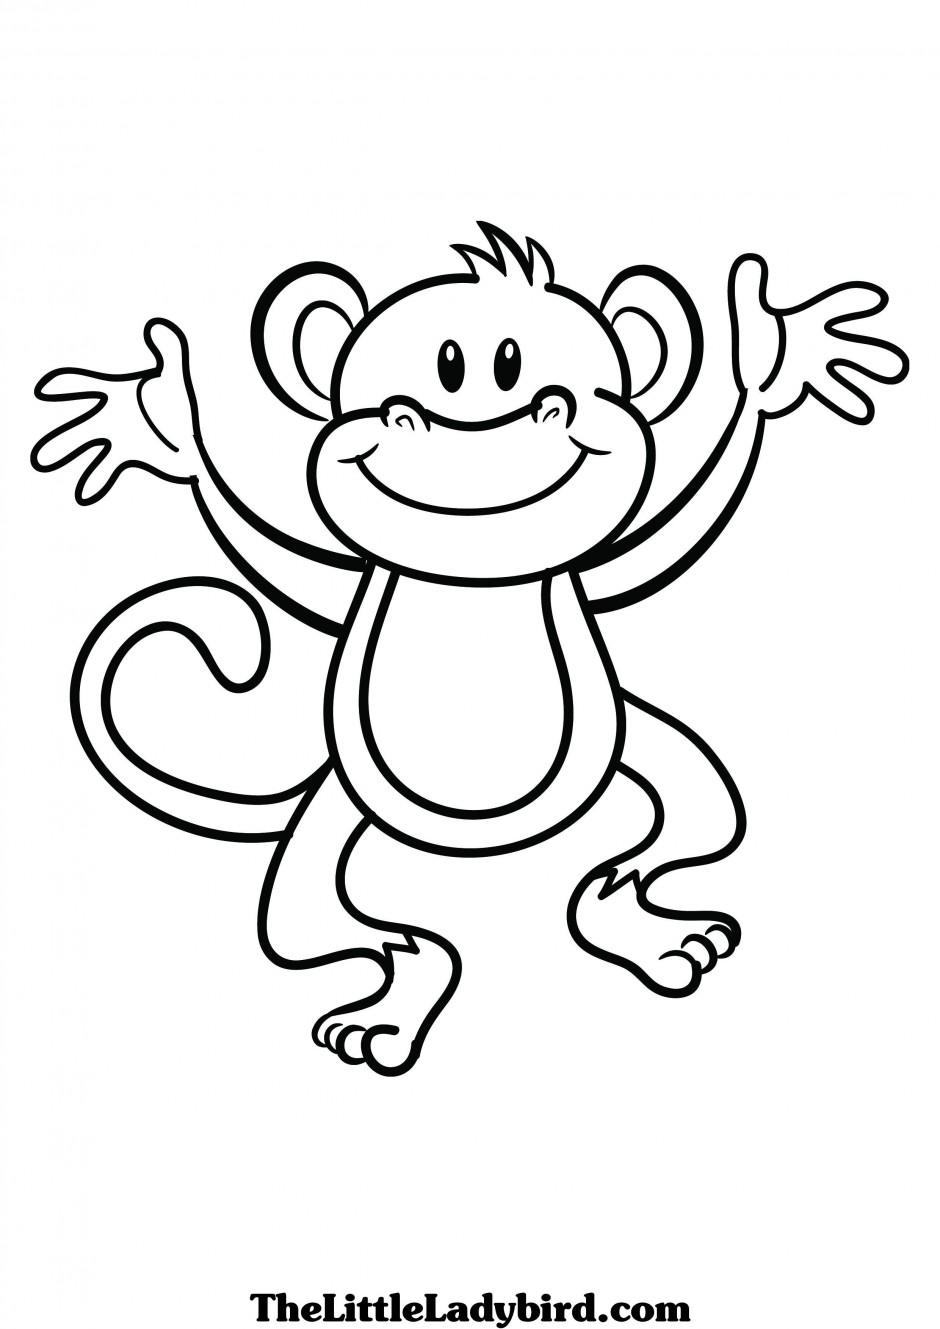 Black and clipart white monkey Monkey Clipart